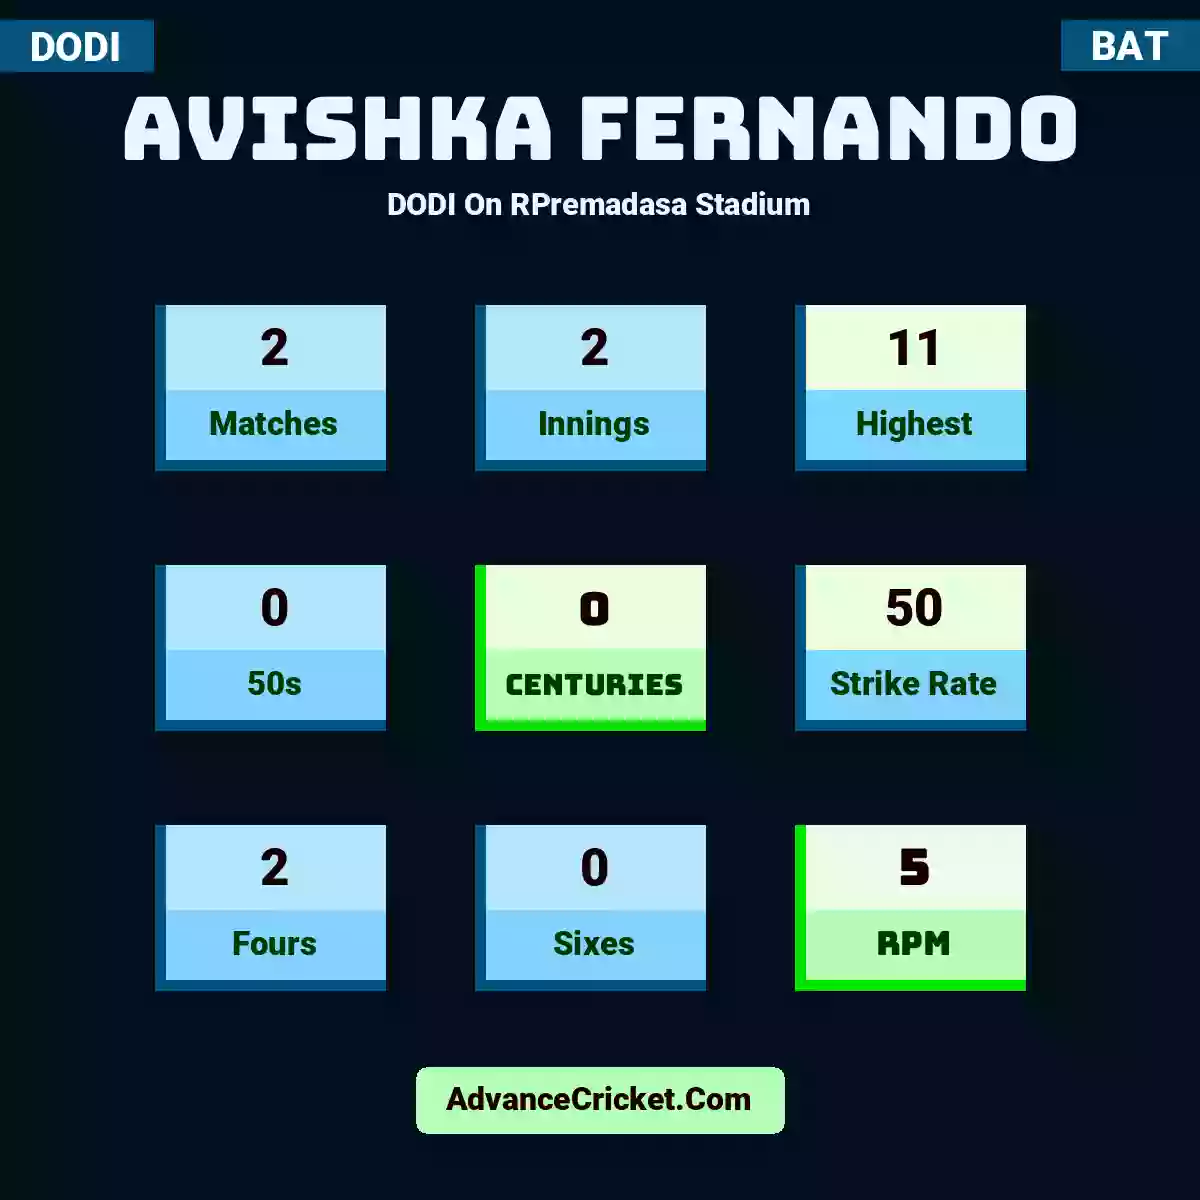 Avishka Fernando DODI  On RPremadasa Stadium, Avishka Fernando played 2 matches, scored 11 runs as highest, 0 half-centuries, and 0 centuries, with a strike rate of 50. A.Fernando hit 2 fours and 0 sixes, with an RPM of 5.